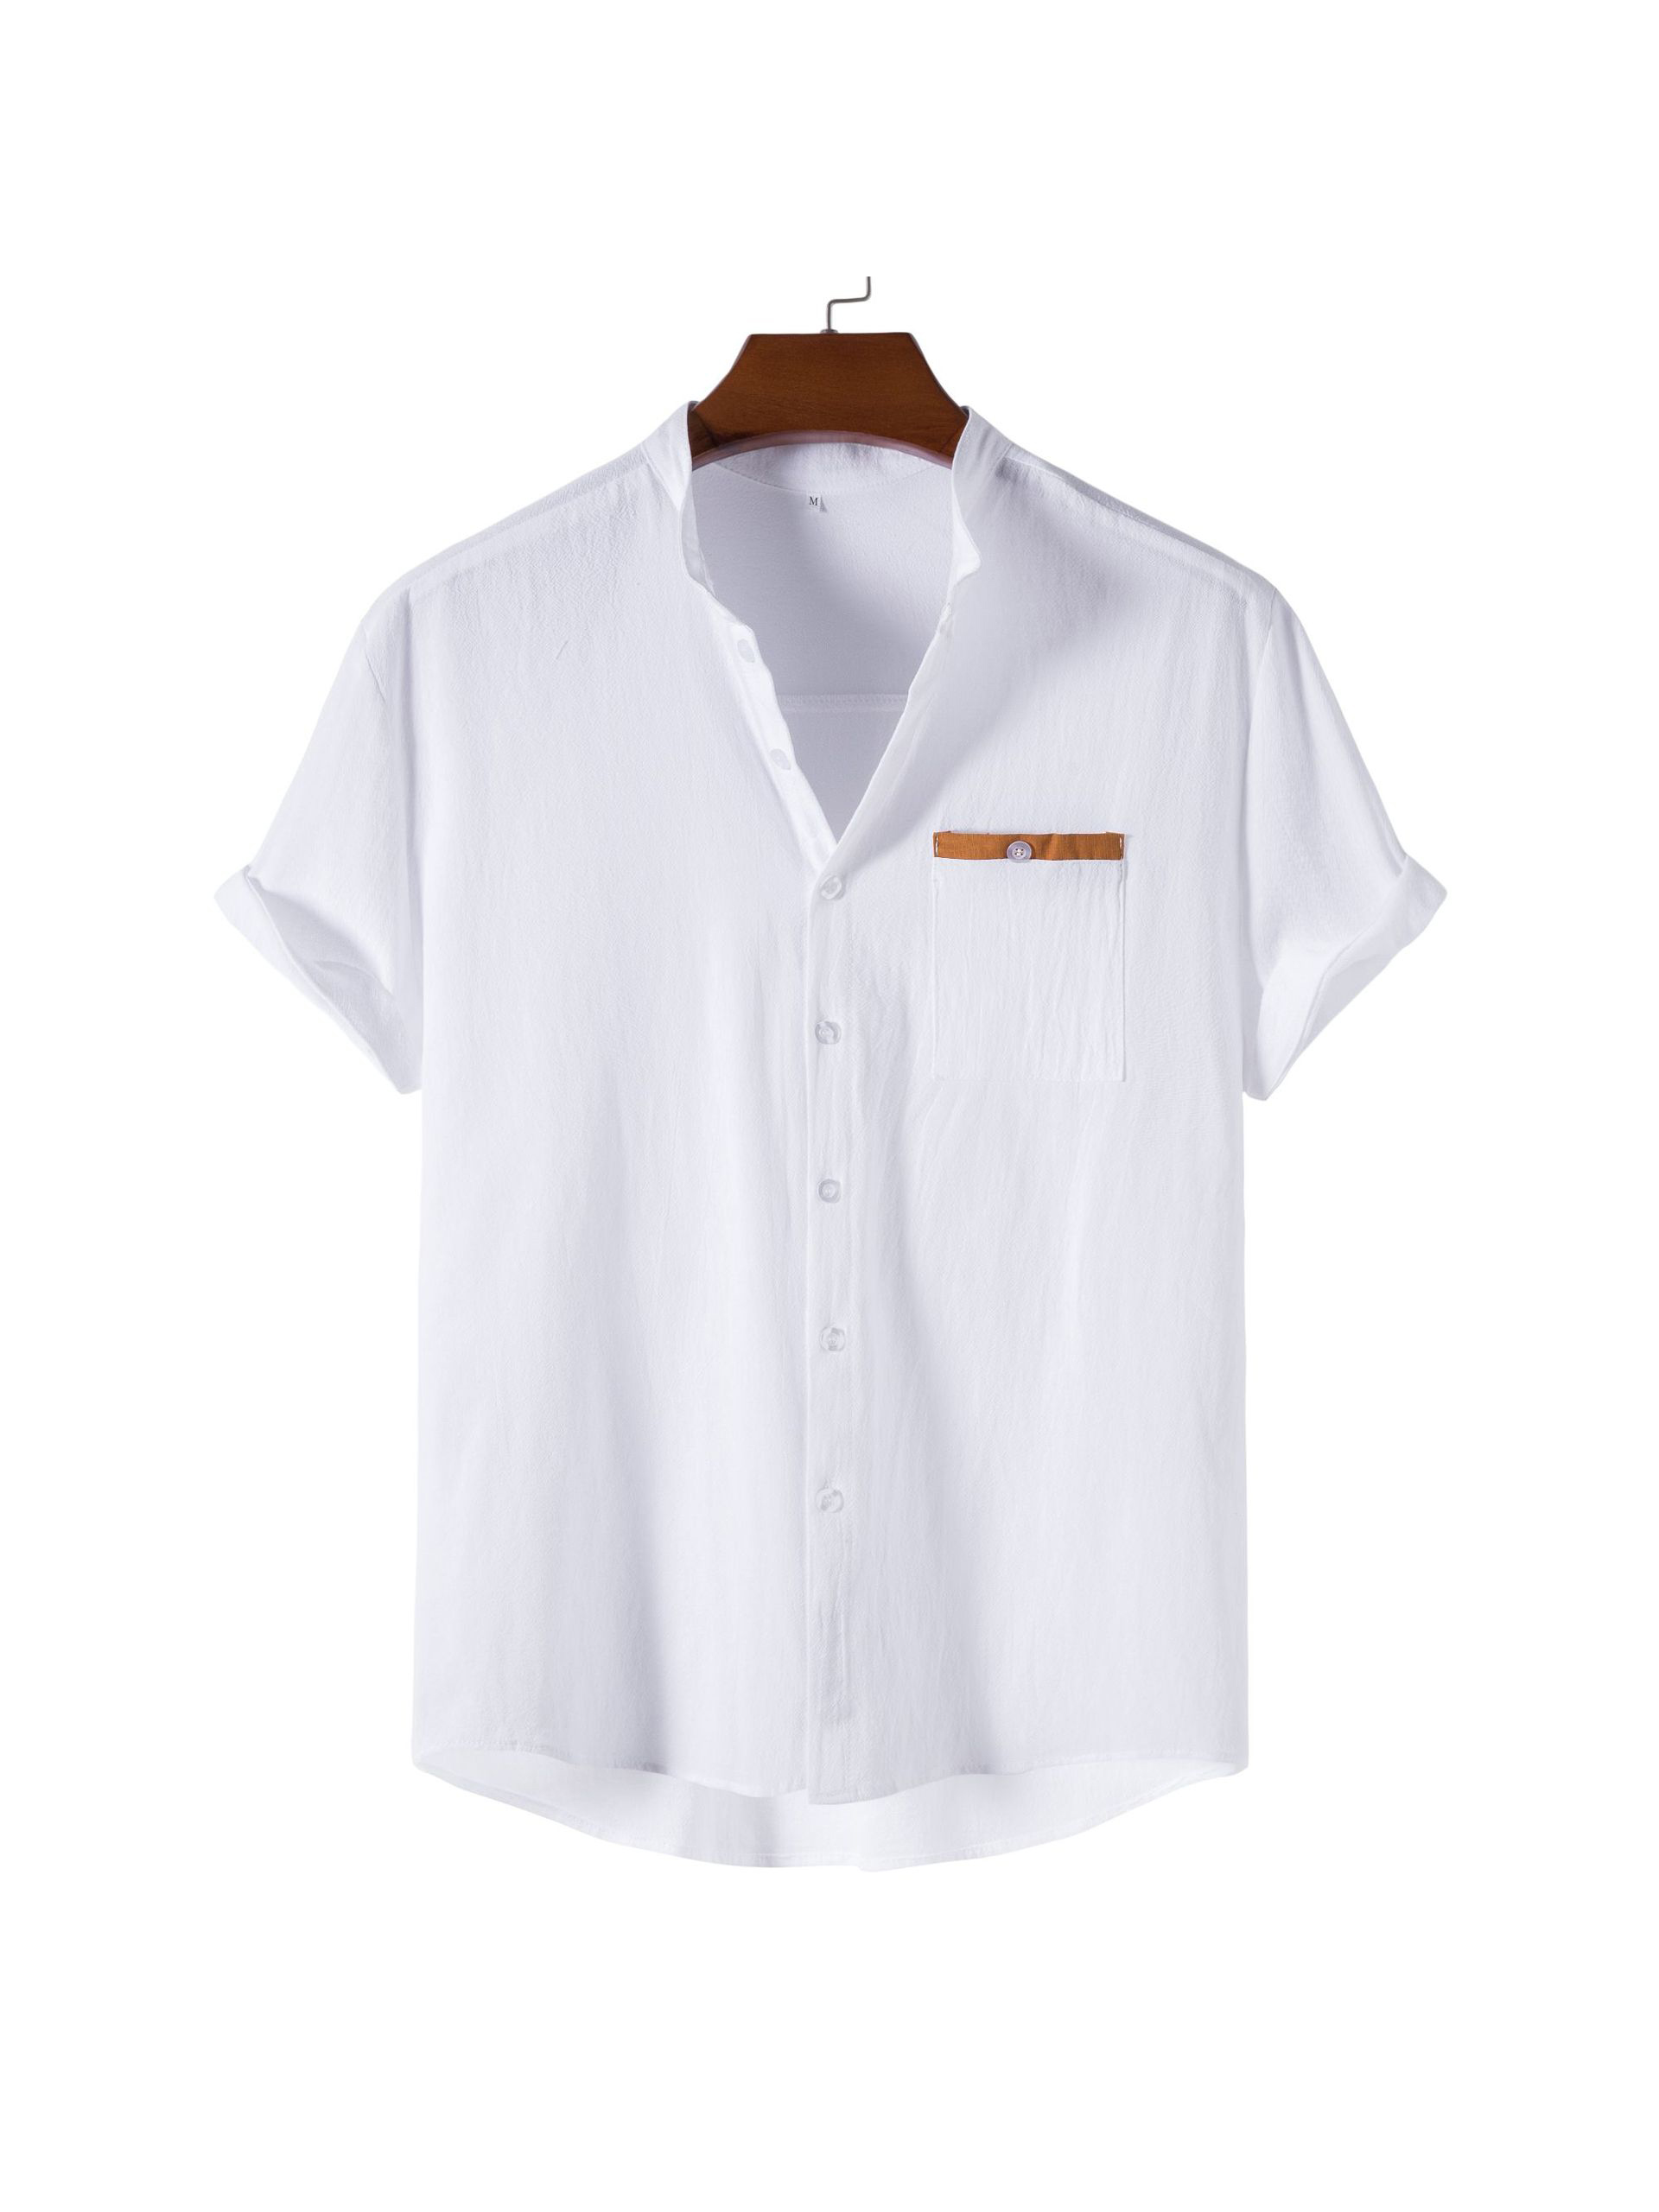 Cheap Wholesale Half Black Half White Collar Shirt Men Online From China